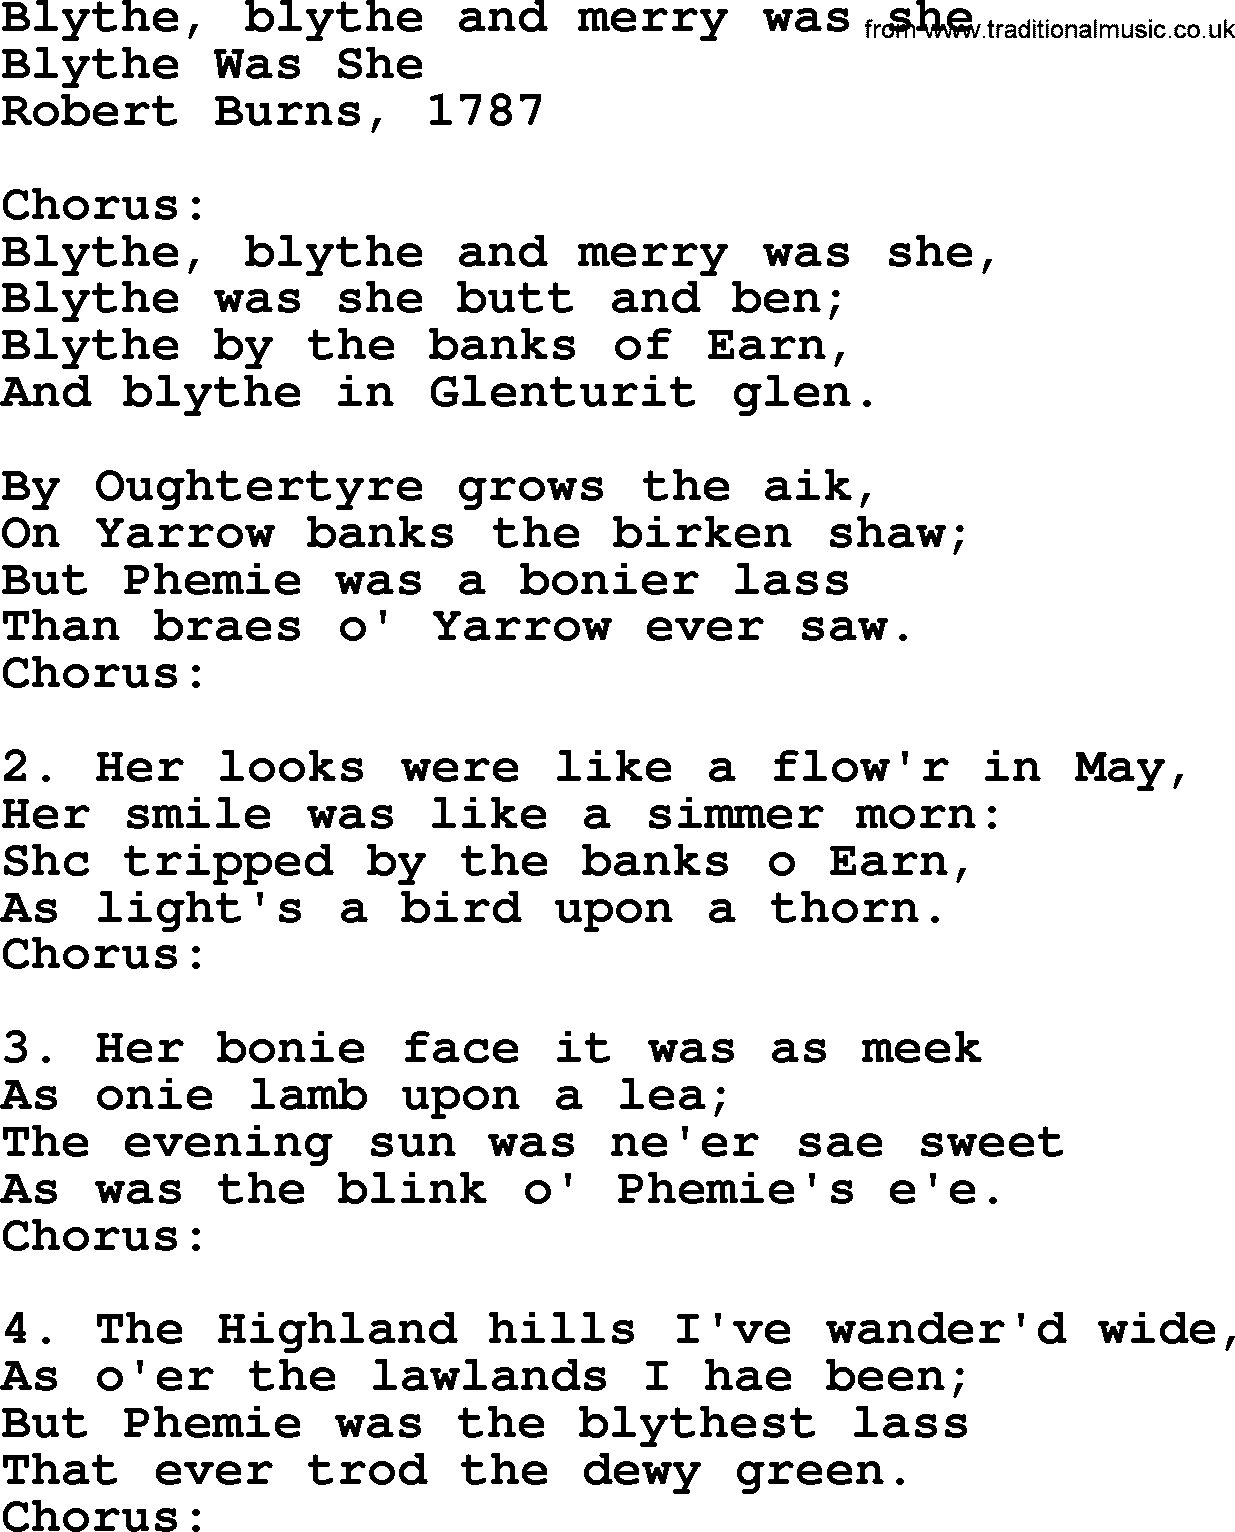 Robert Burns Songs & Lyrics: Blythe, Blythe And Merry Was She